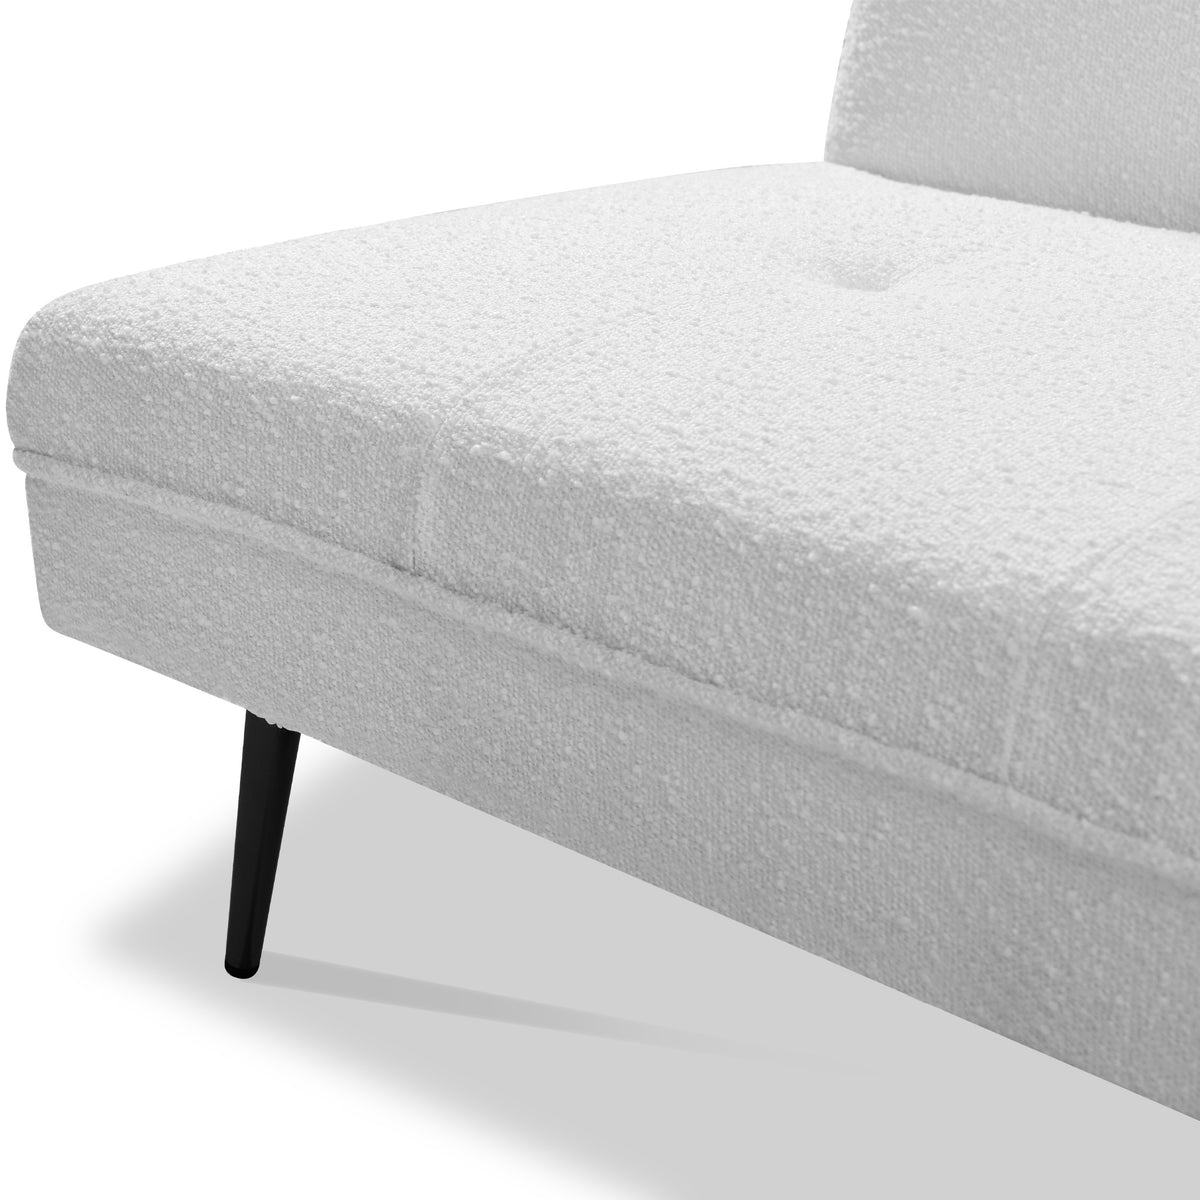 Homelegance Jazz Click-Clack Sofa Bed - Chocolate - Textured Plush  Microfiber